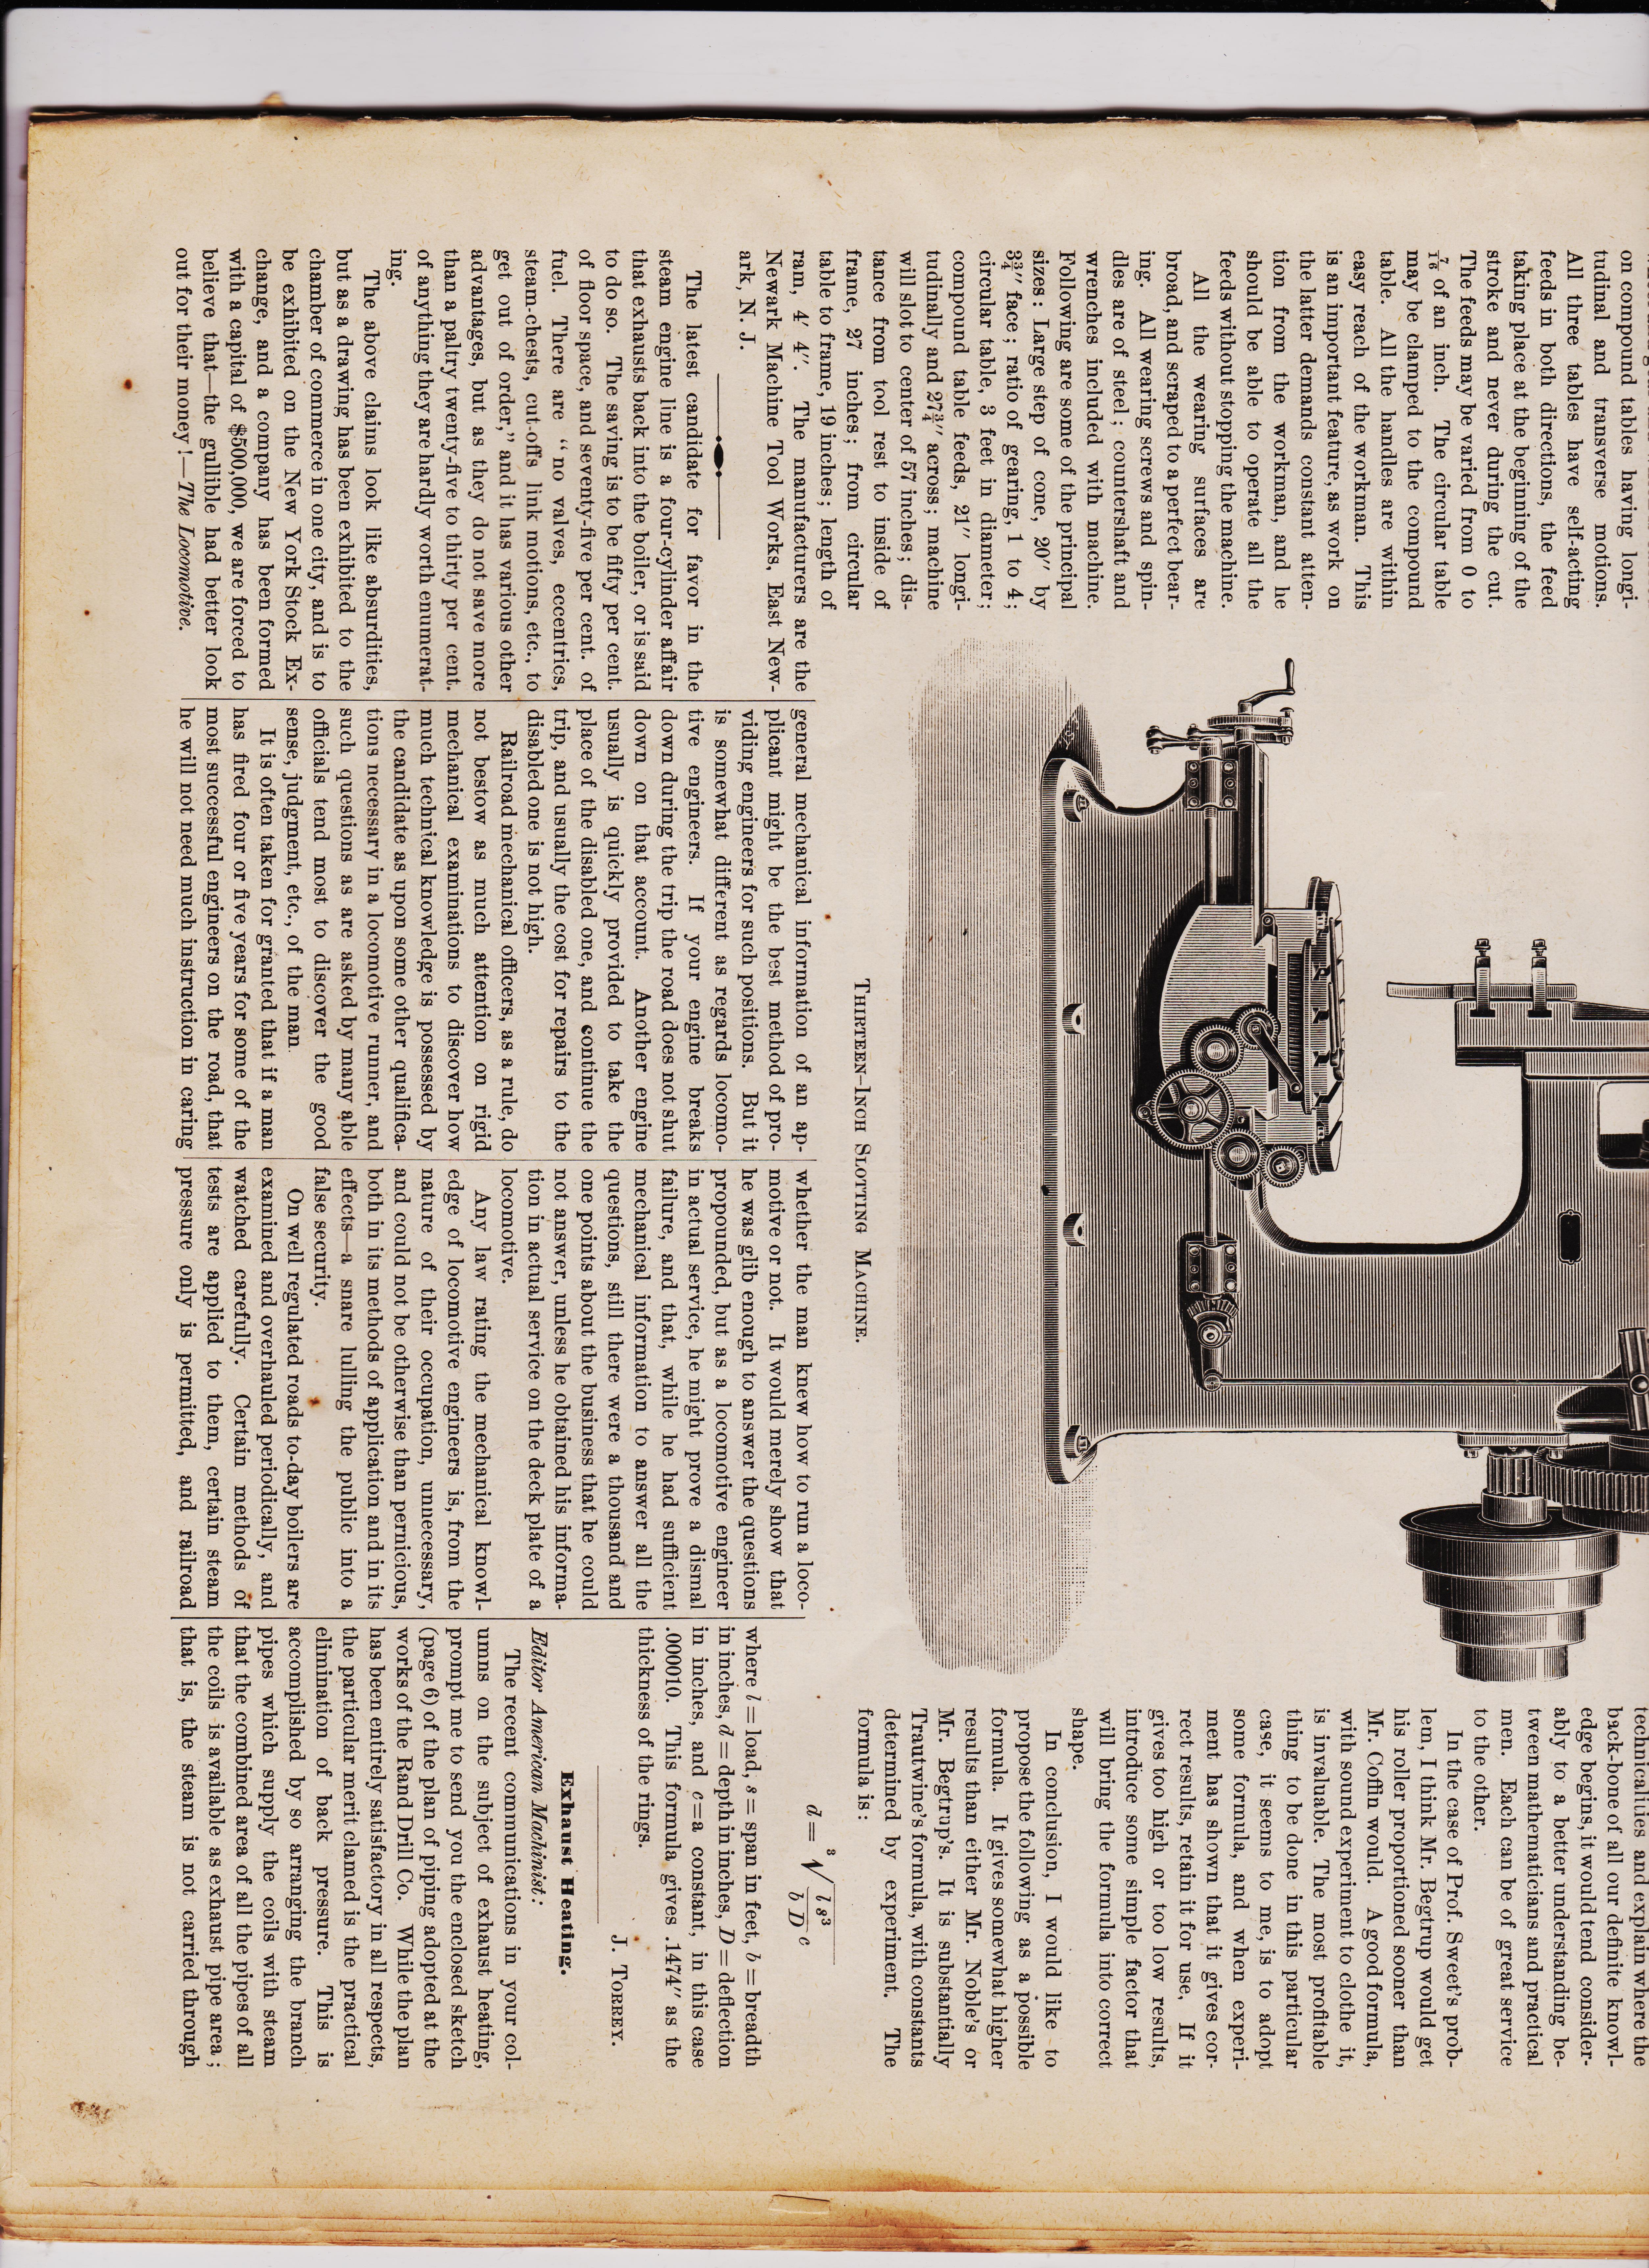 https://antiquemachinery.com/images-American-Machinist-Dec-17-1887/American-Machinist-Dec-17-1887-pg-5-bot-13-inch-Verticle-Slotter-Newark-Machine-Works-Examination-of-Steam-Engine-Locomotive-Engineers-inch-Verticle-Slotter-Newark-Machine-Works.jpeg